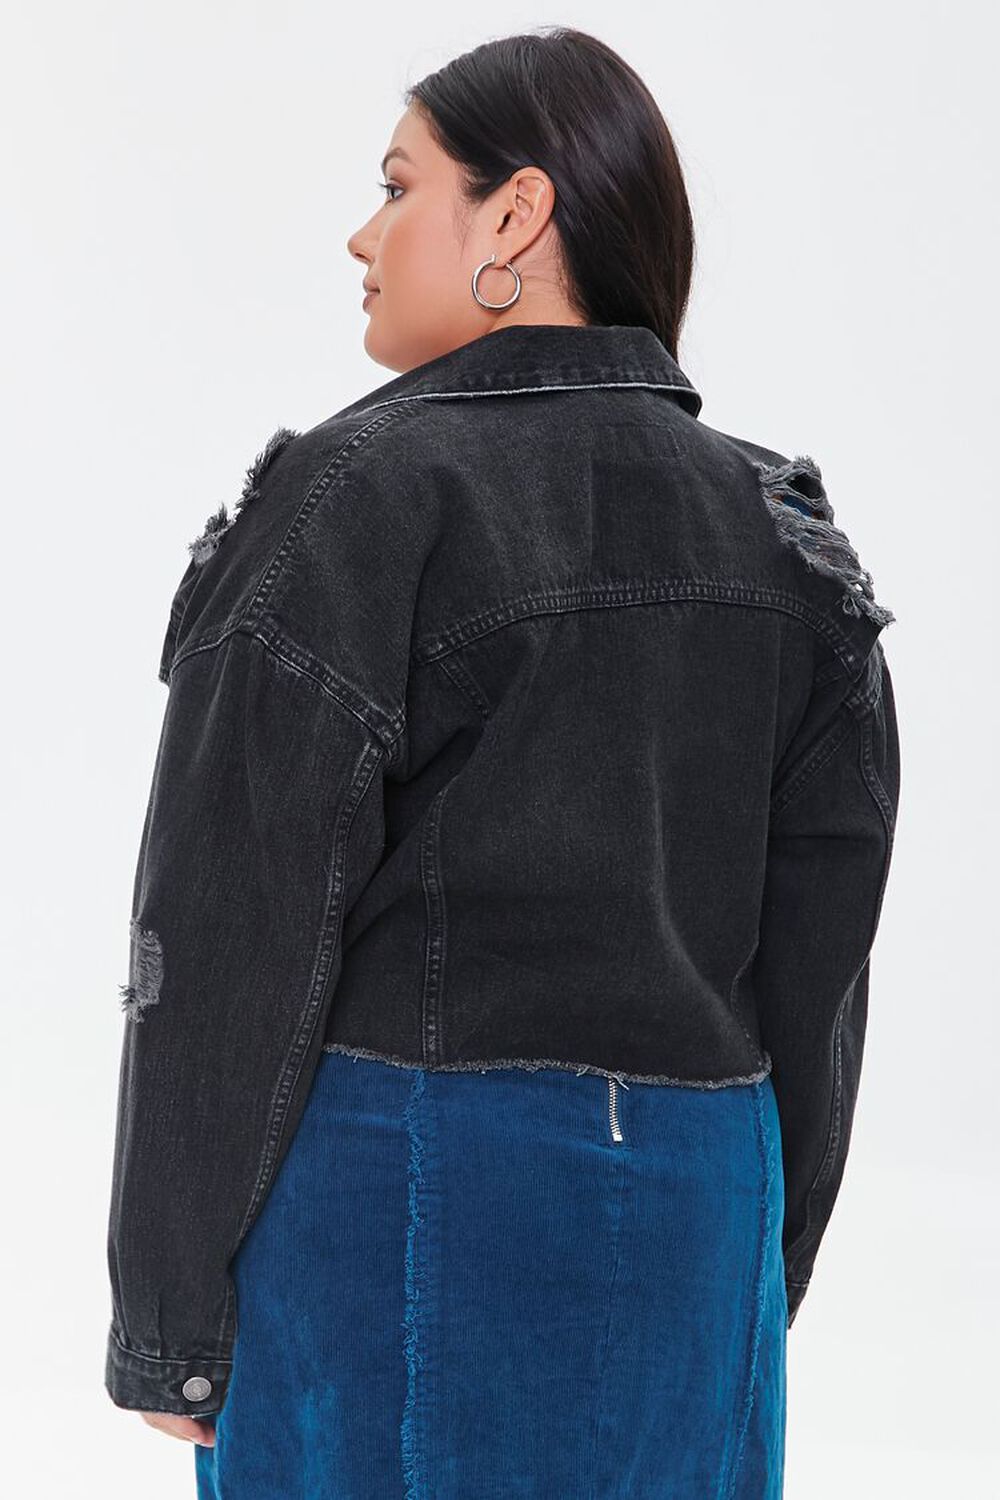 WASHED BLACK Plus Size Distressed Denim Jacket, image 3